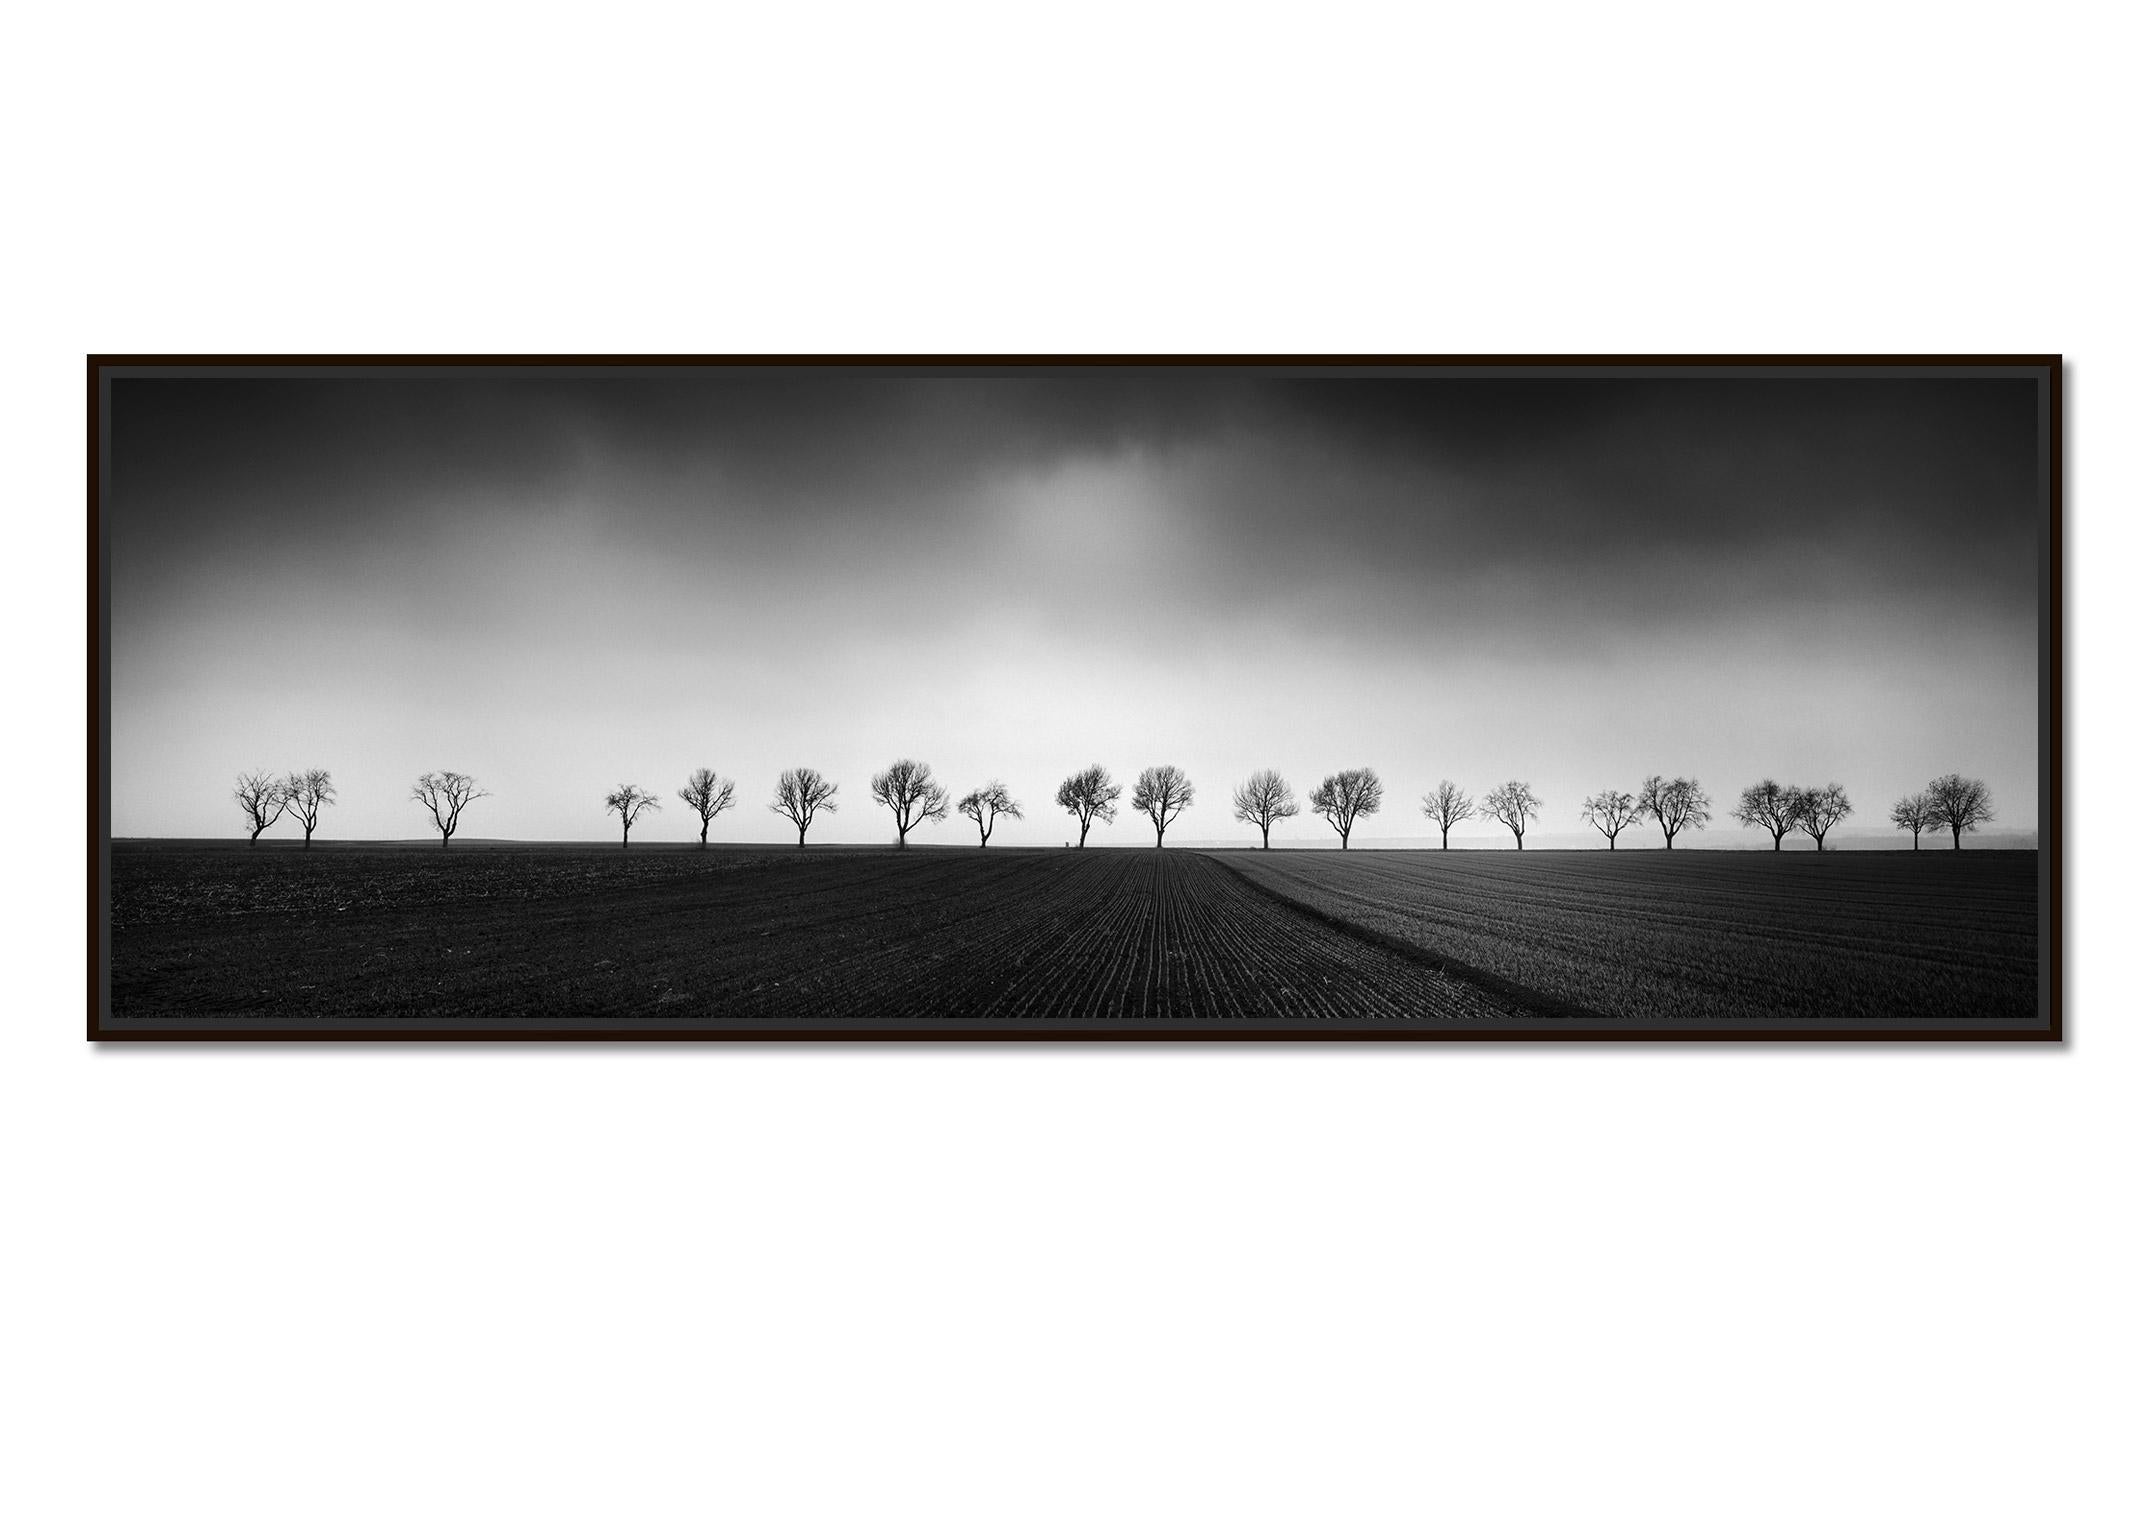 Twenty Cherry Trees, Avenue, black & white panorama, landscape, art photography - Photograph by Gerald Berghammer